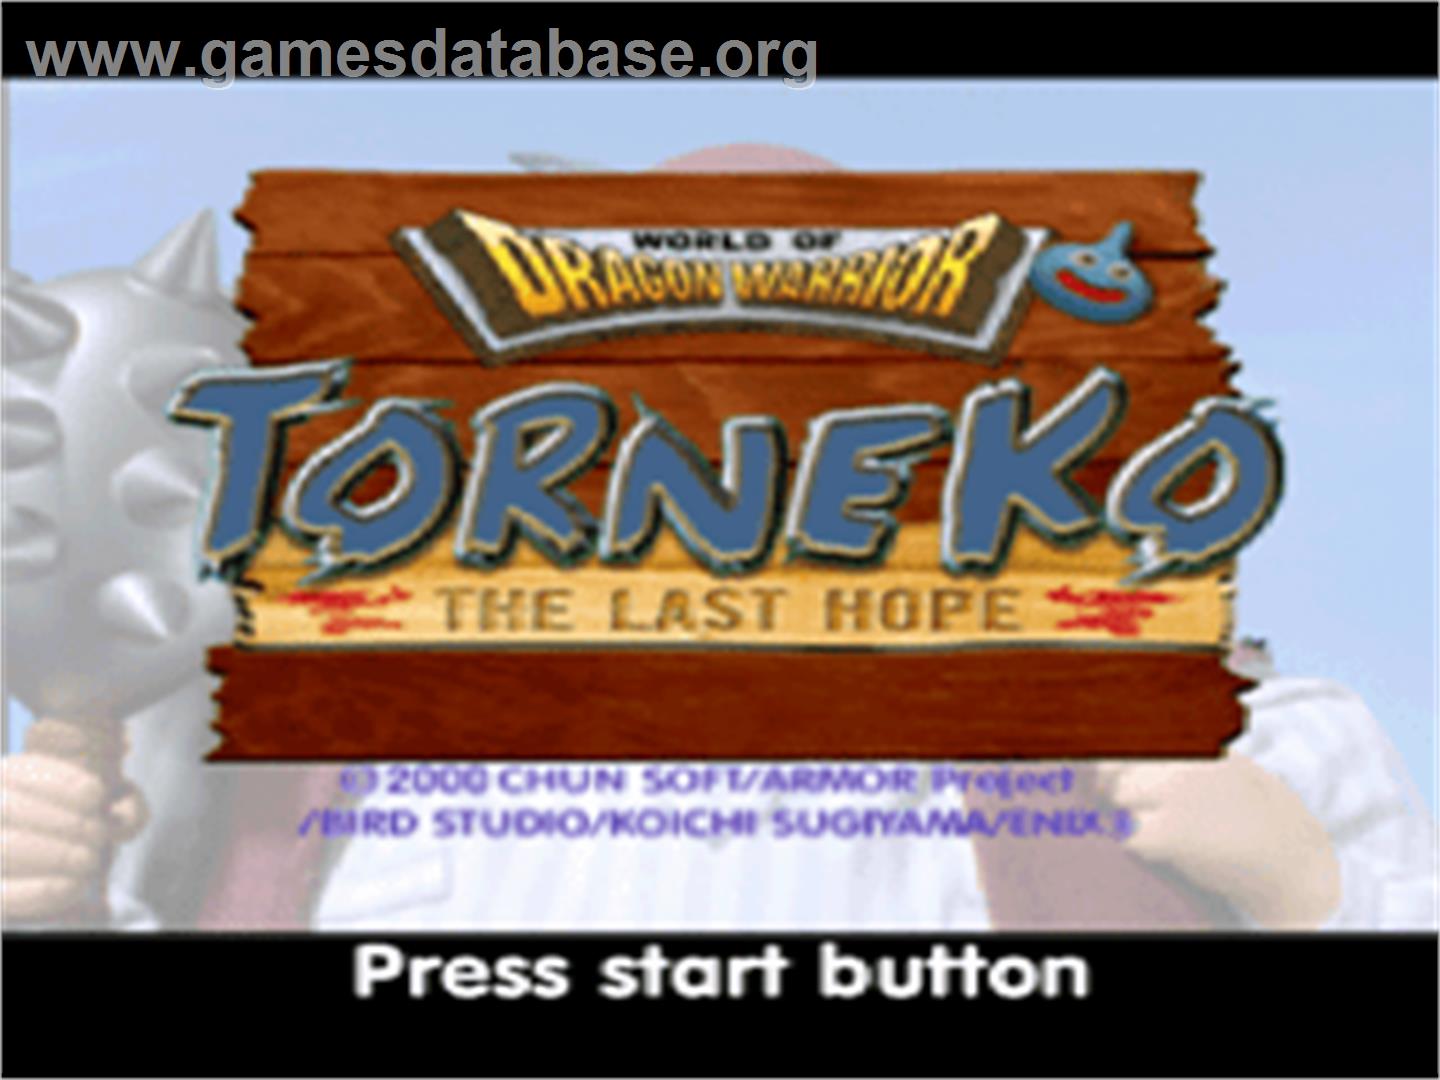 World of Dragon Warrior: Torneko: The Last Hope - Sony Playstation - Artwork - Title Screen